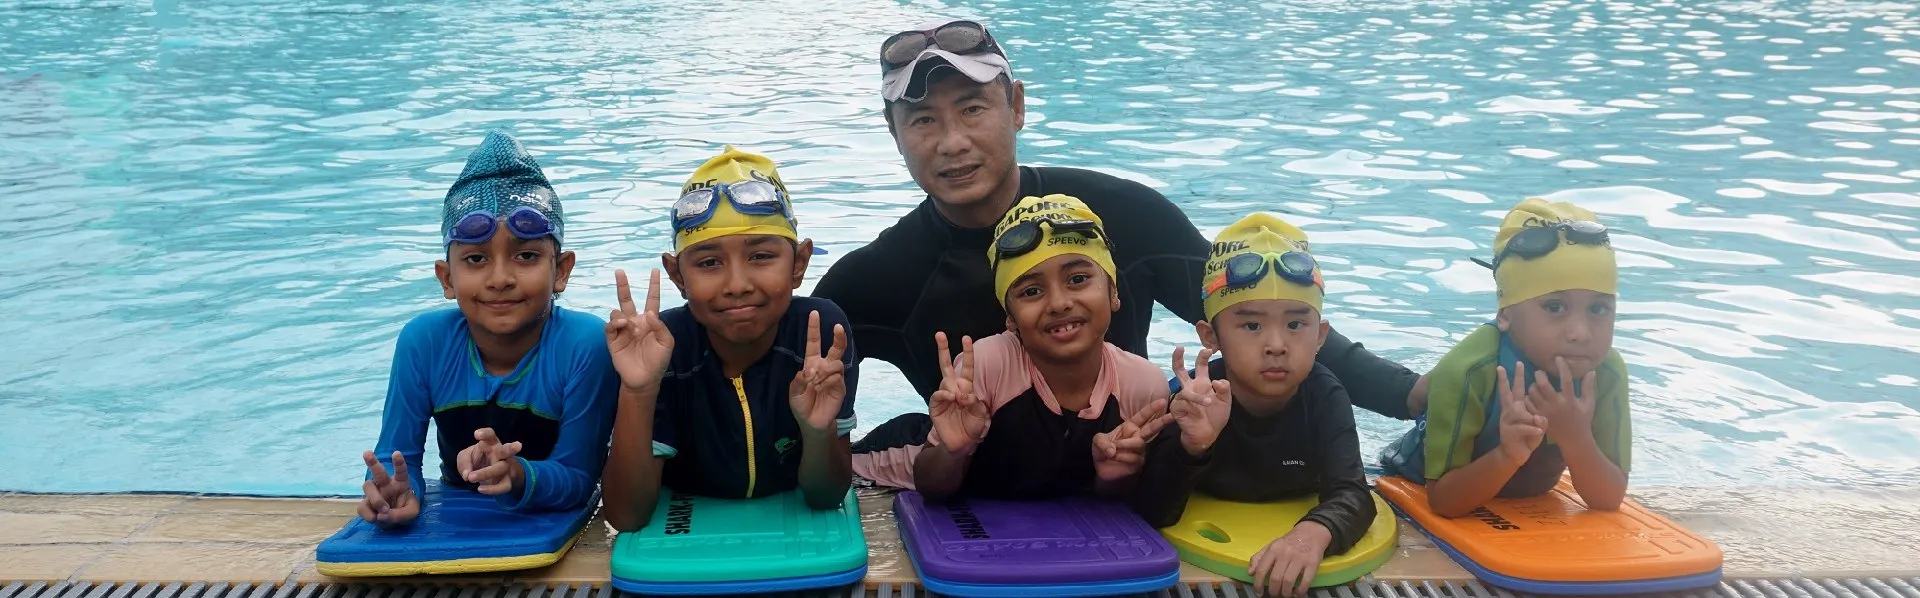 Singapore Swim School Testimonial